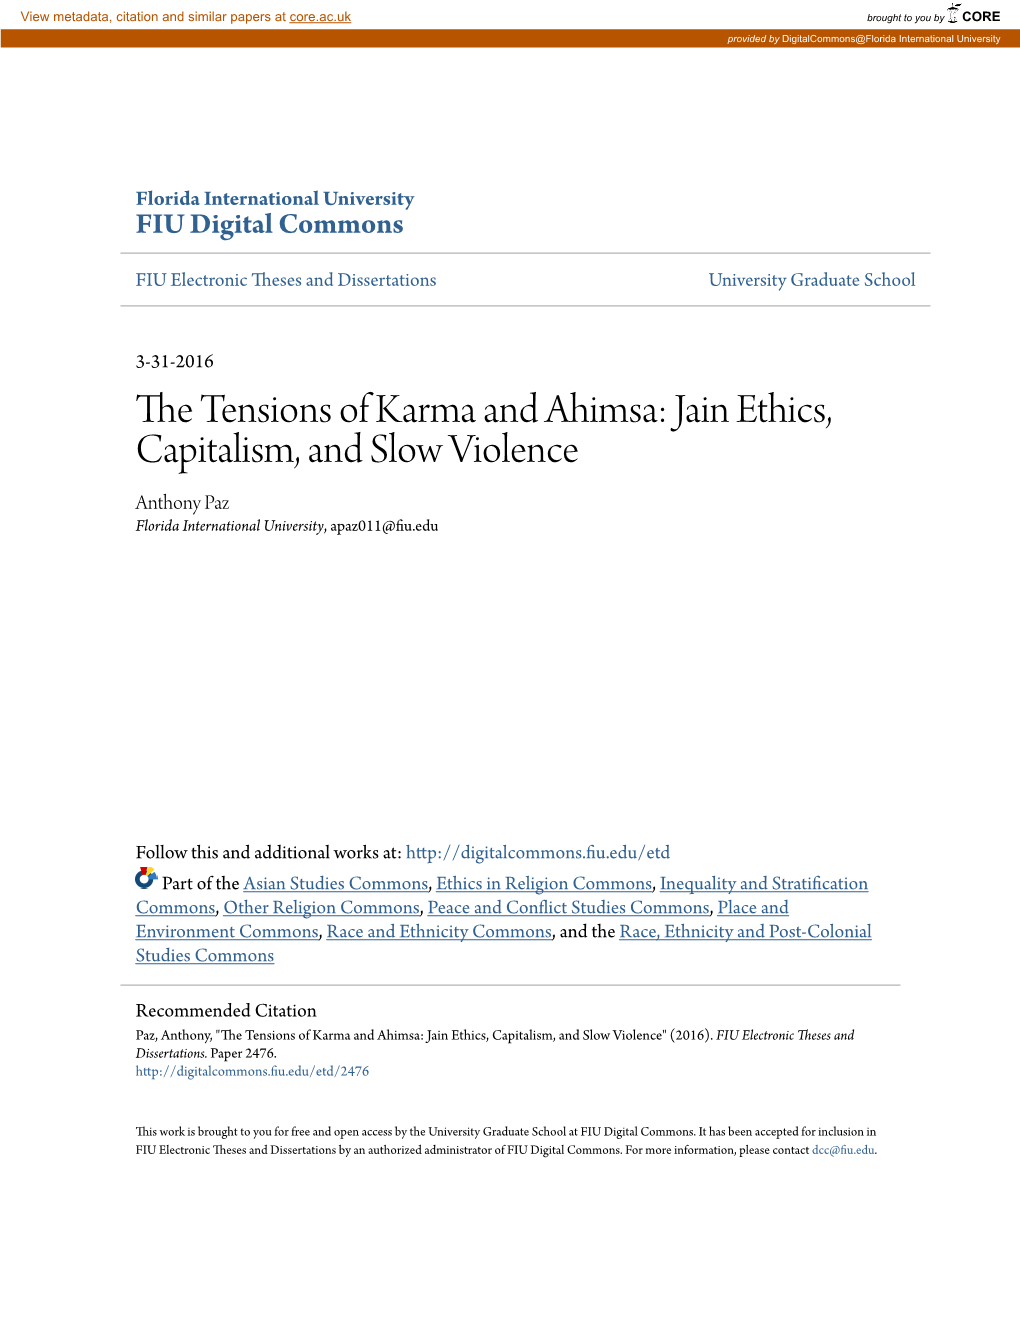 The Tensions of Karma and Ahimsa: Jain Ethics, Capitalism, and Slow